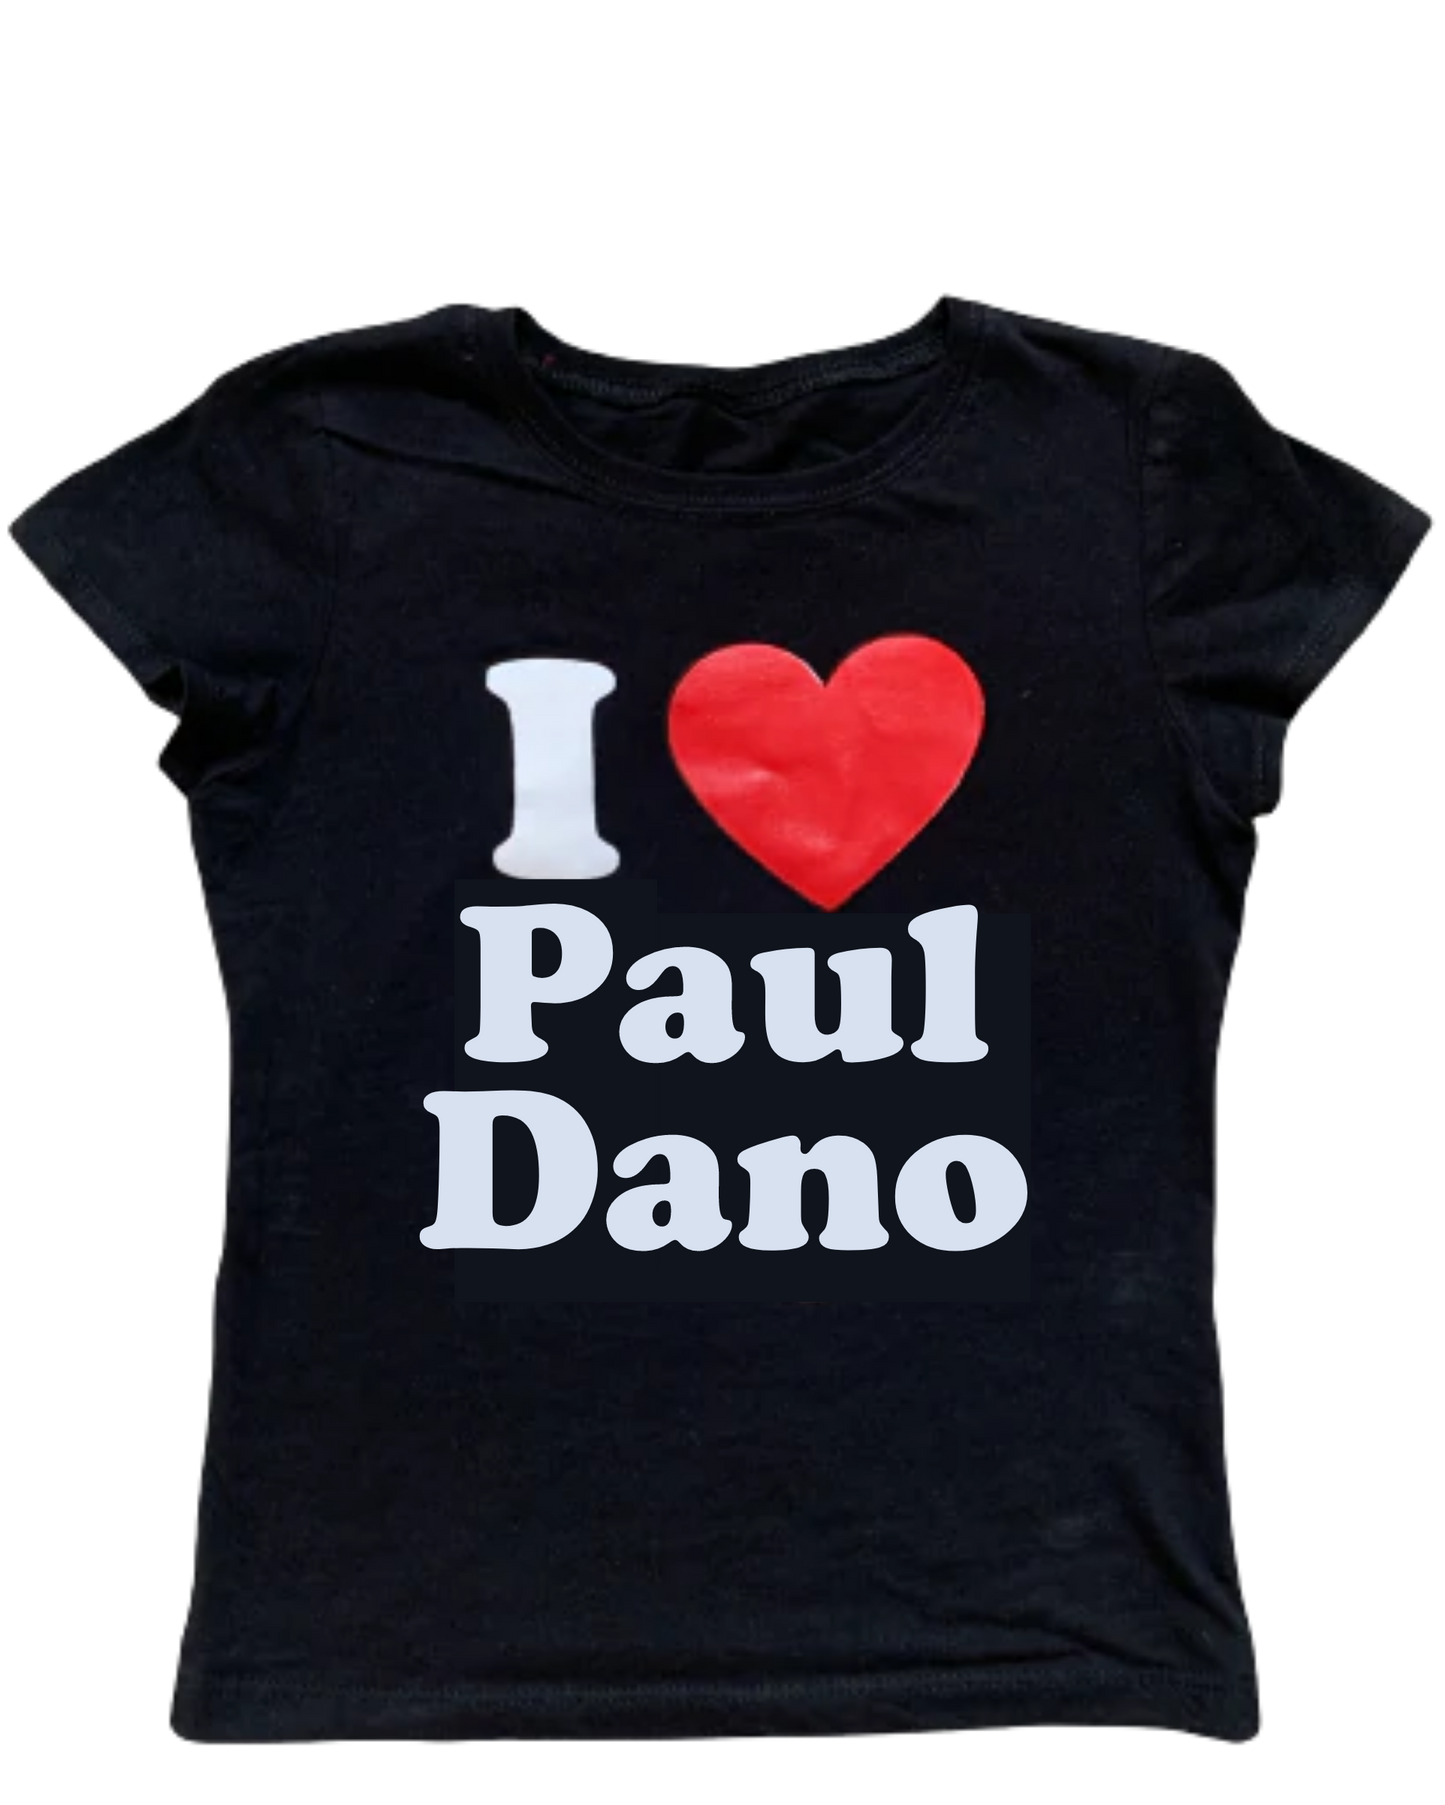 I HEART PAUL DANO